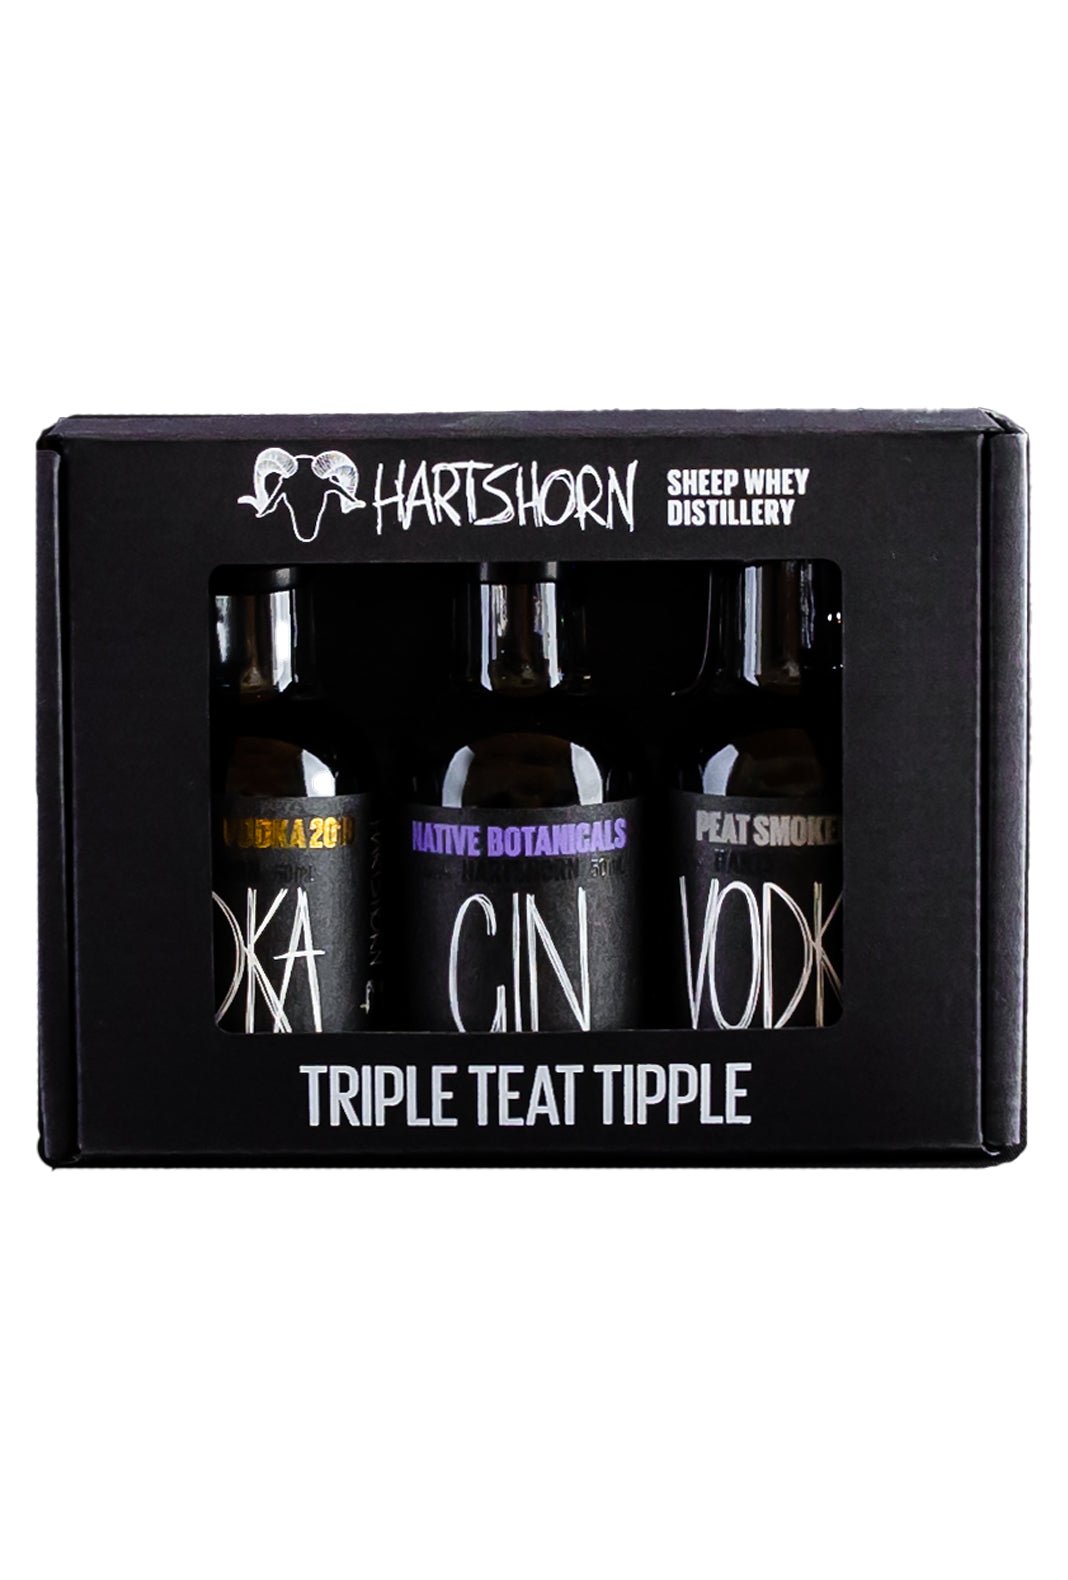 Hartshorn Trio Original Vodka, Gin, Peated Vodka Gift Pack 3 x 50ml | Liquor & Spirits | Shop online at Spirits of France